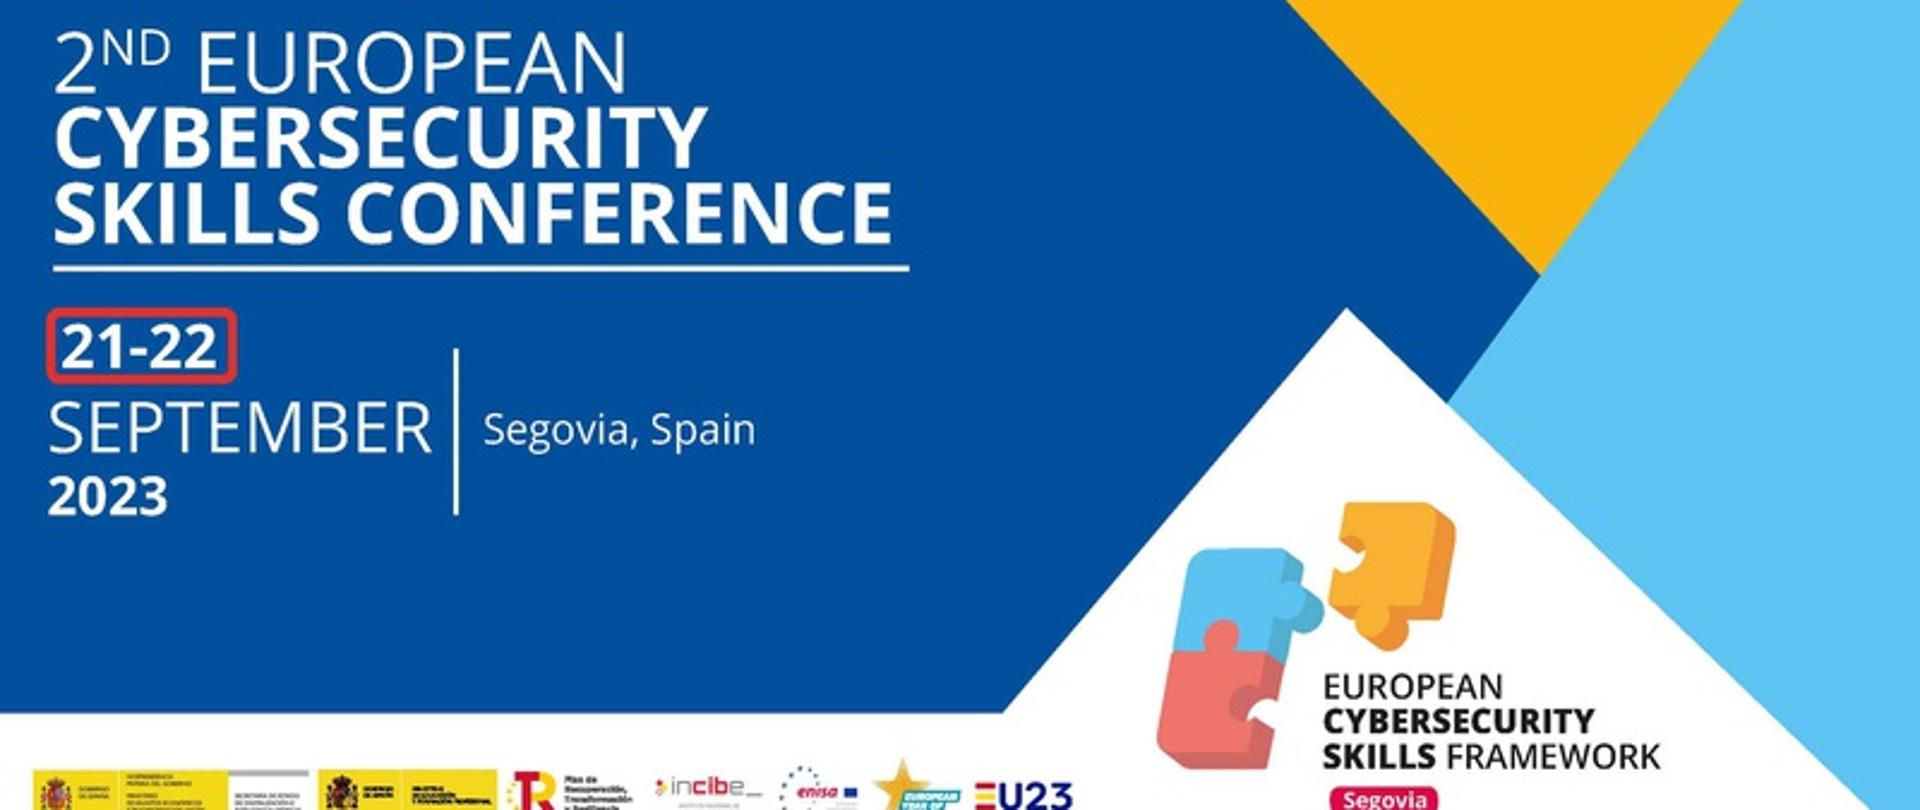 Save the date 2 Konferencja European Cybersecurity Skills 2023 21-22 wrzesień 2023, Segowia, Hiszpania